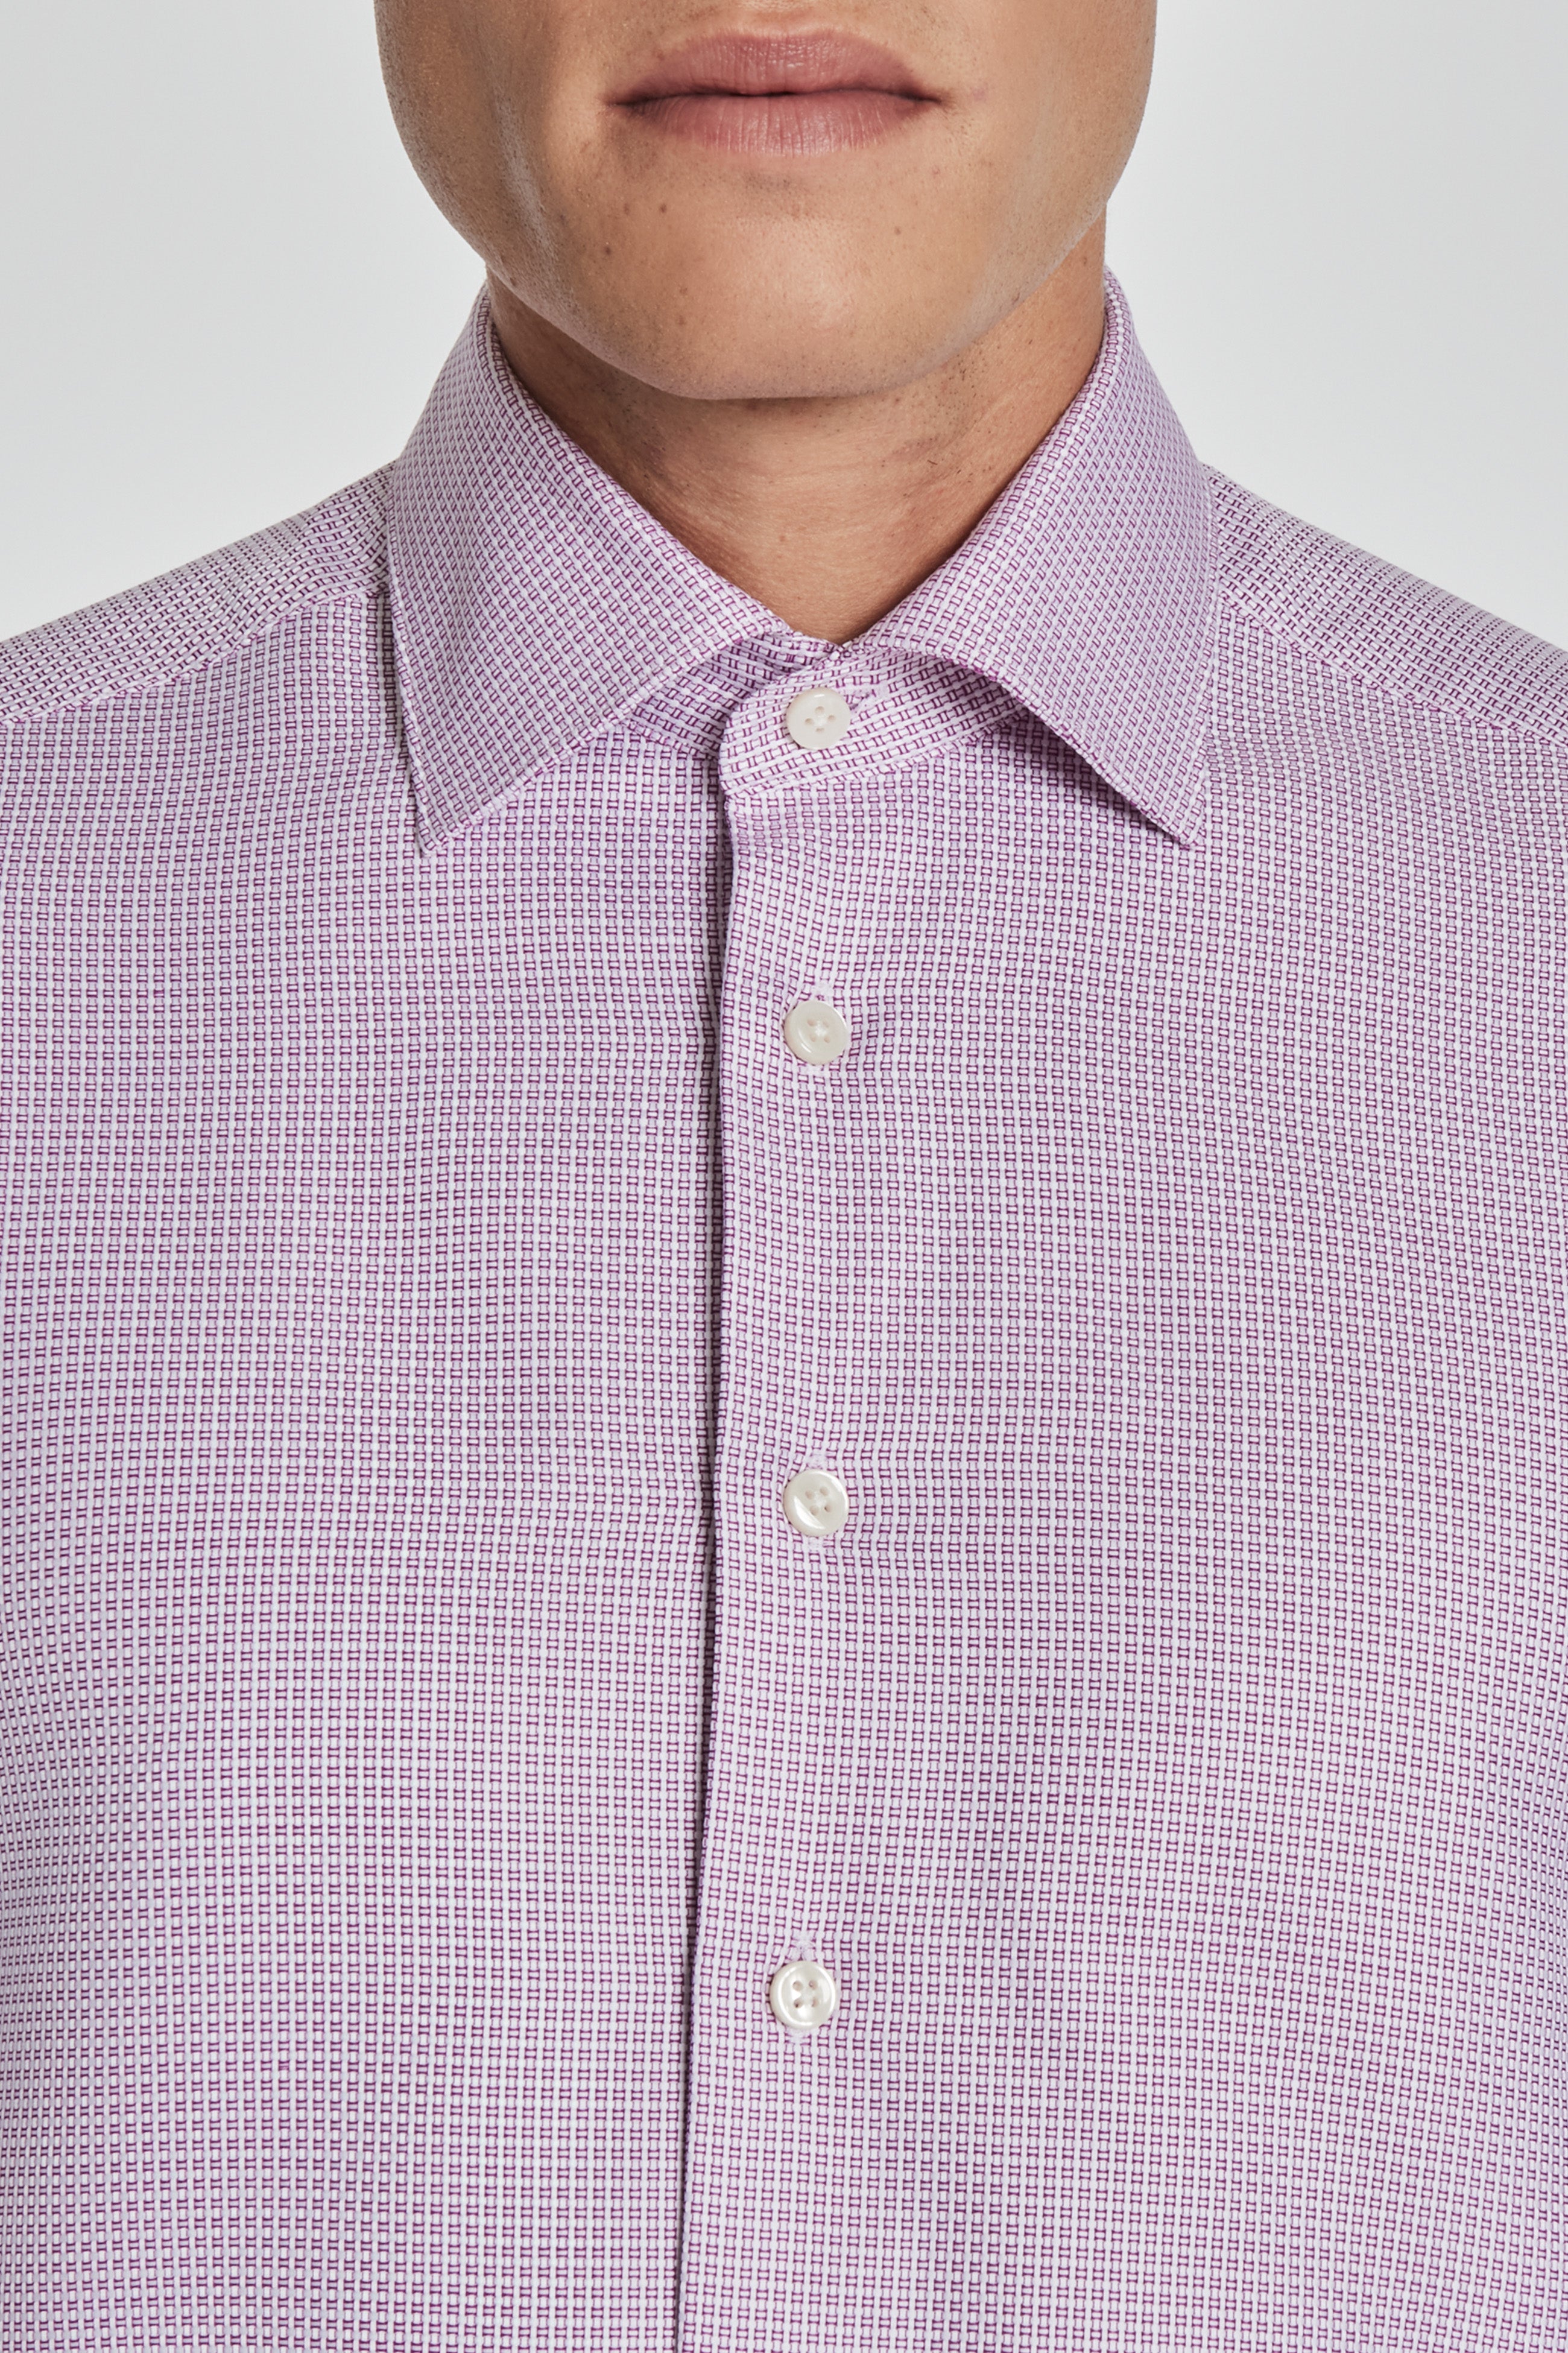 Alt view 8 Geometric Weave Cotton Dress Shirt in Purple